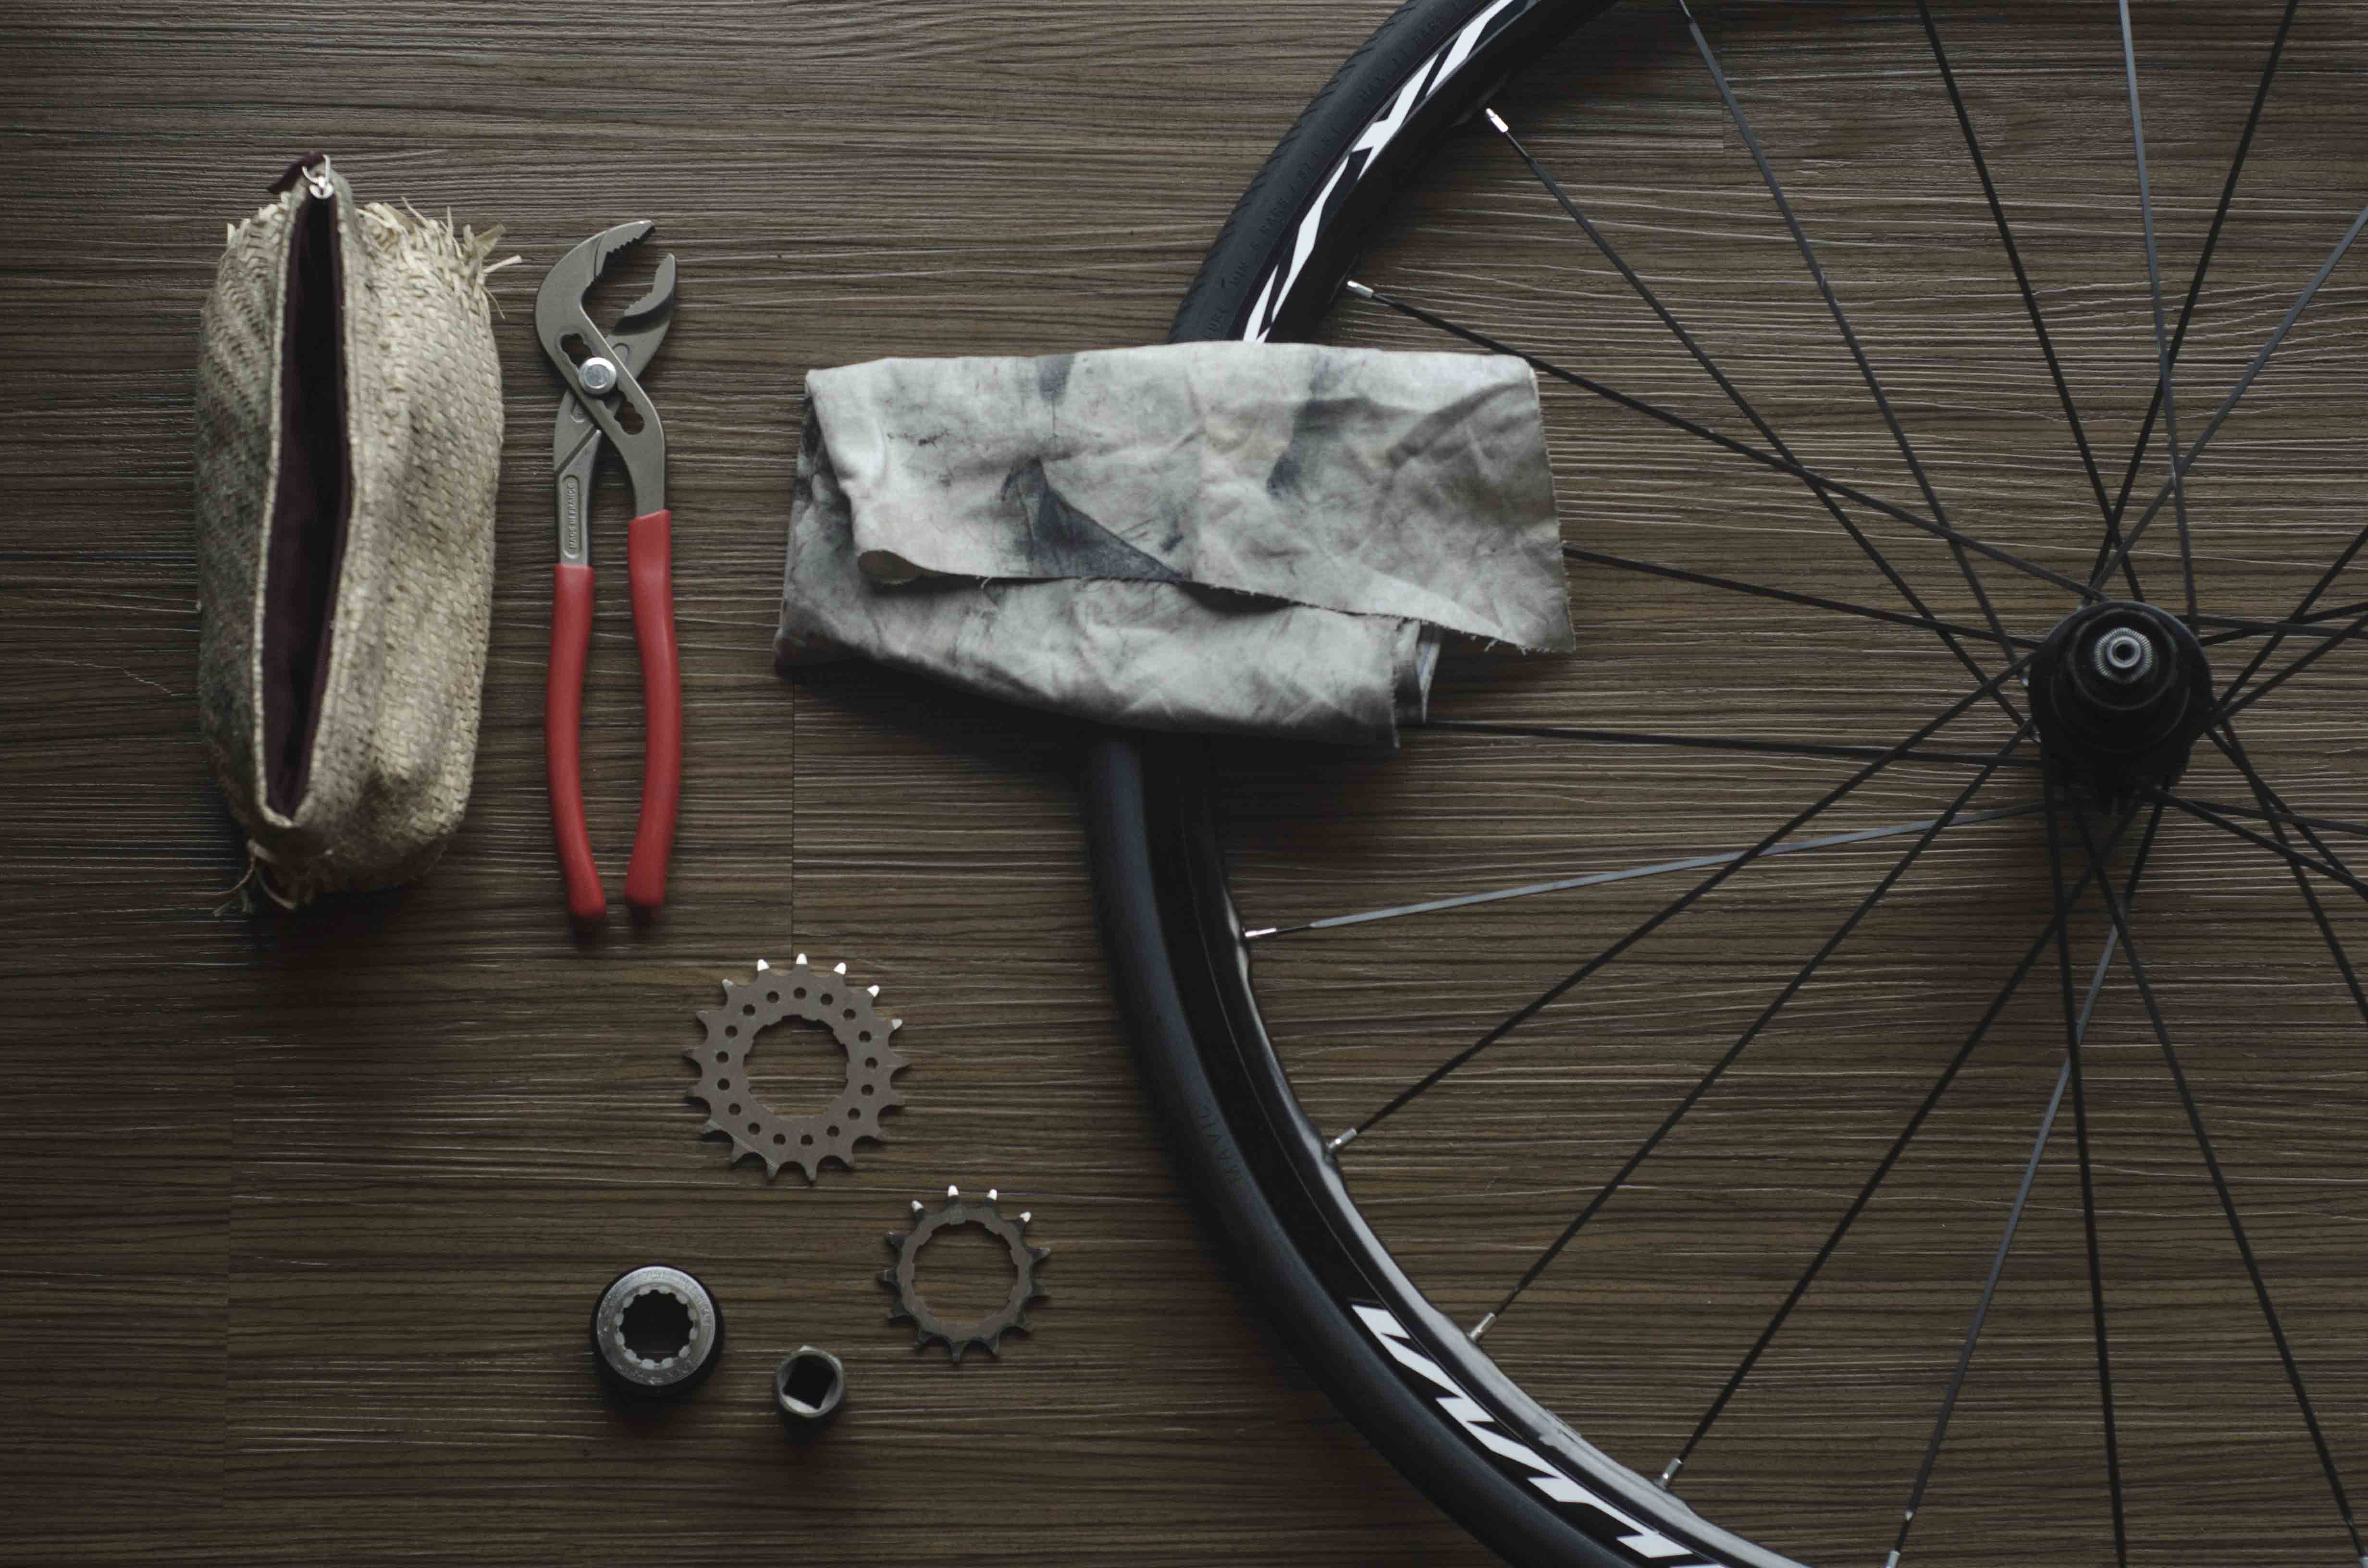 Sculpteo-Bike-Project repairs